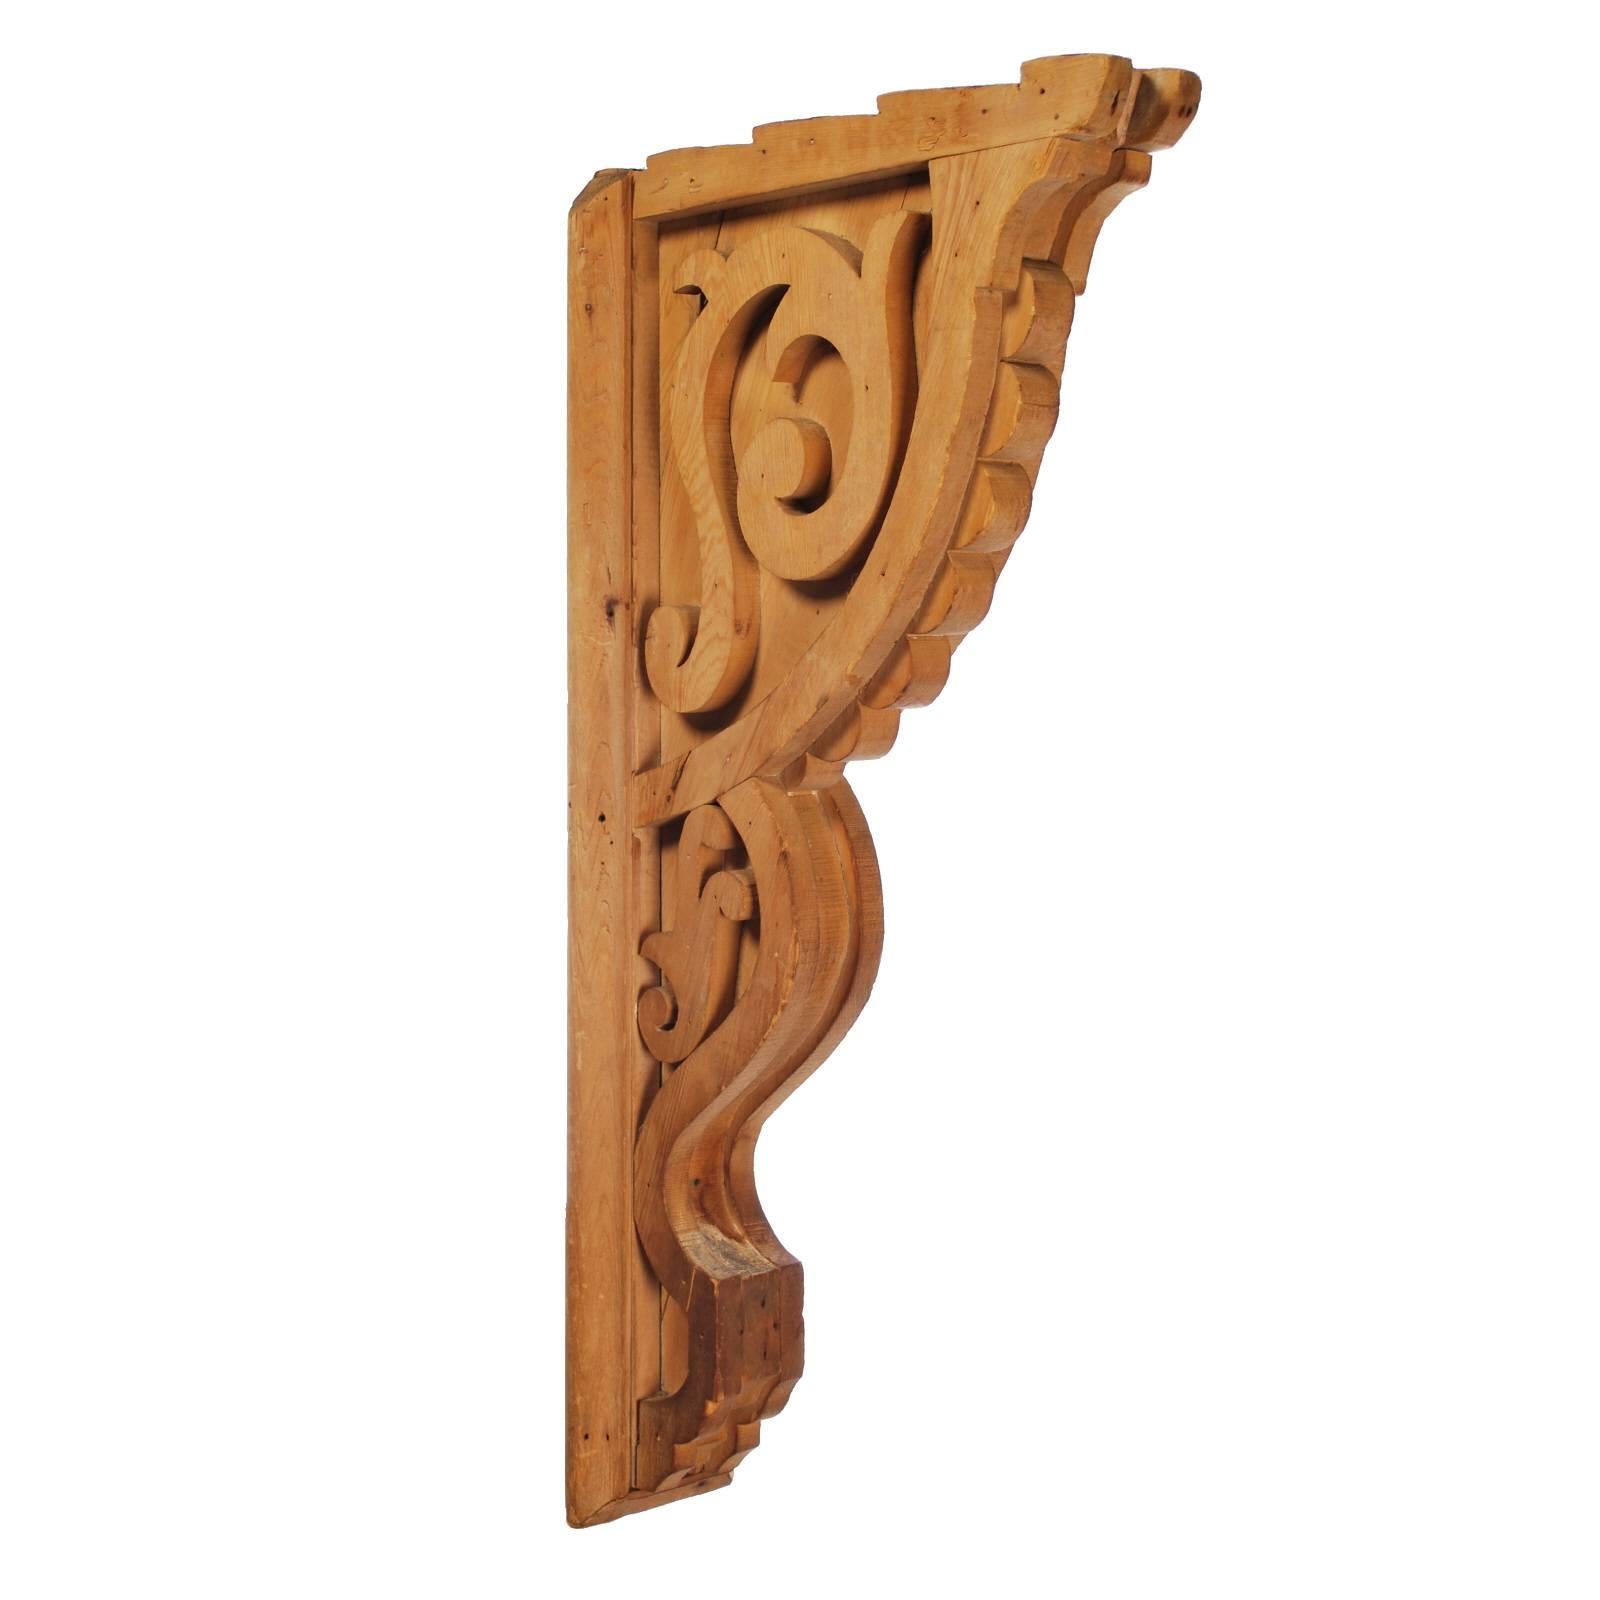 Large Antique Wood Corbel, Bracket / Architectural Element For Sale